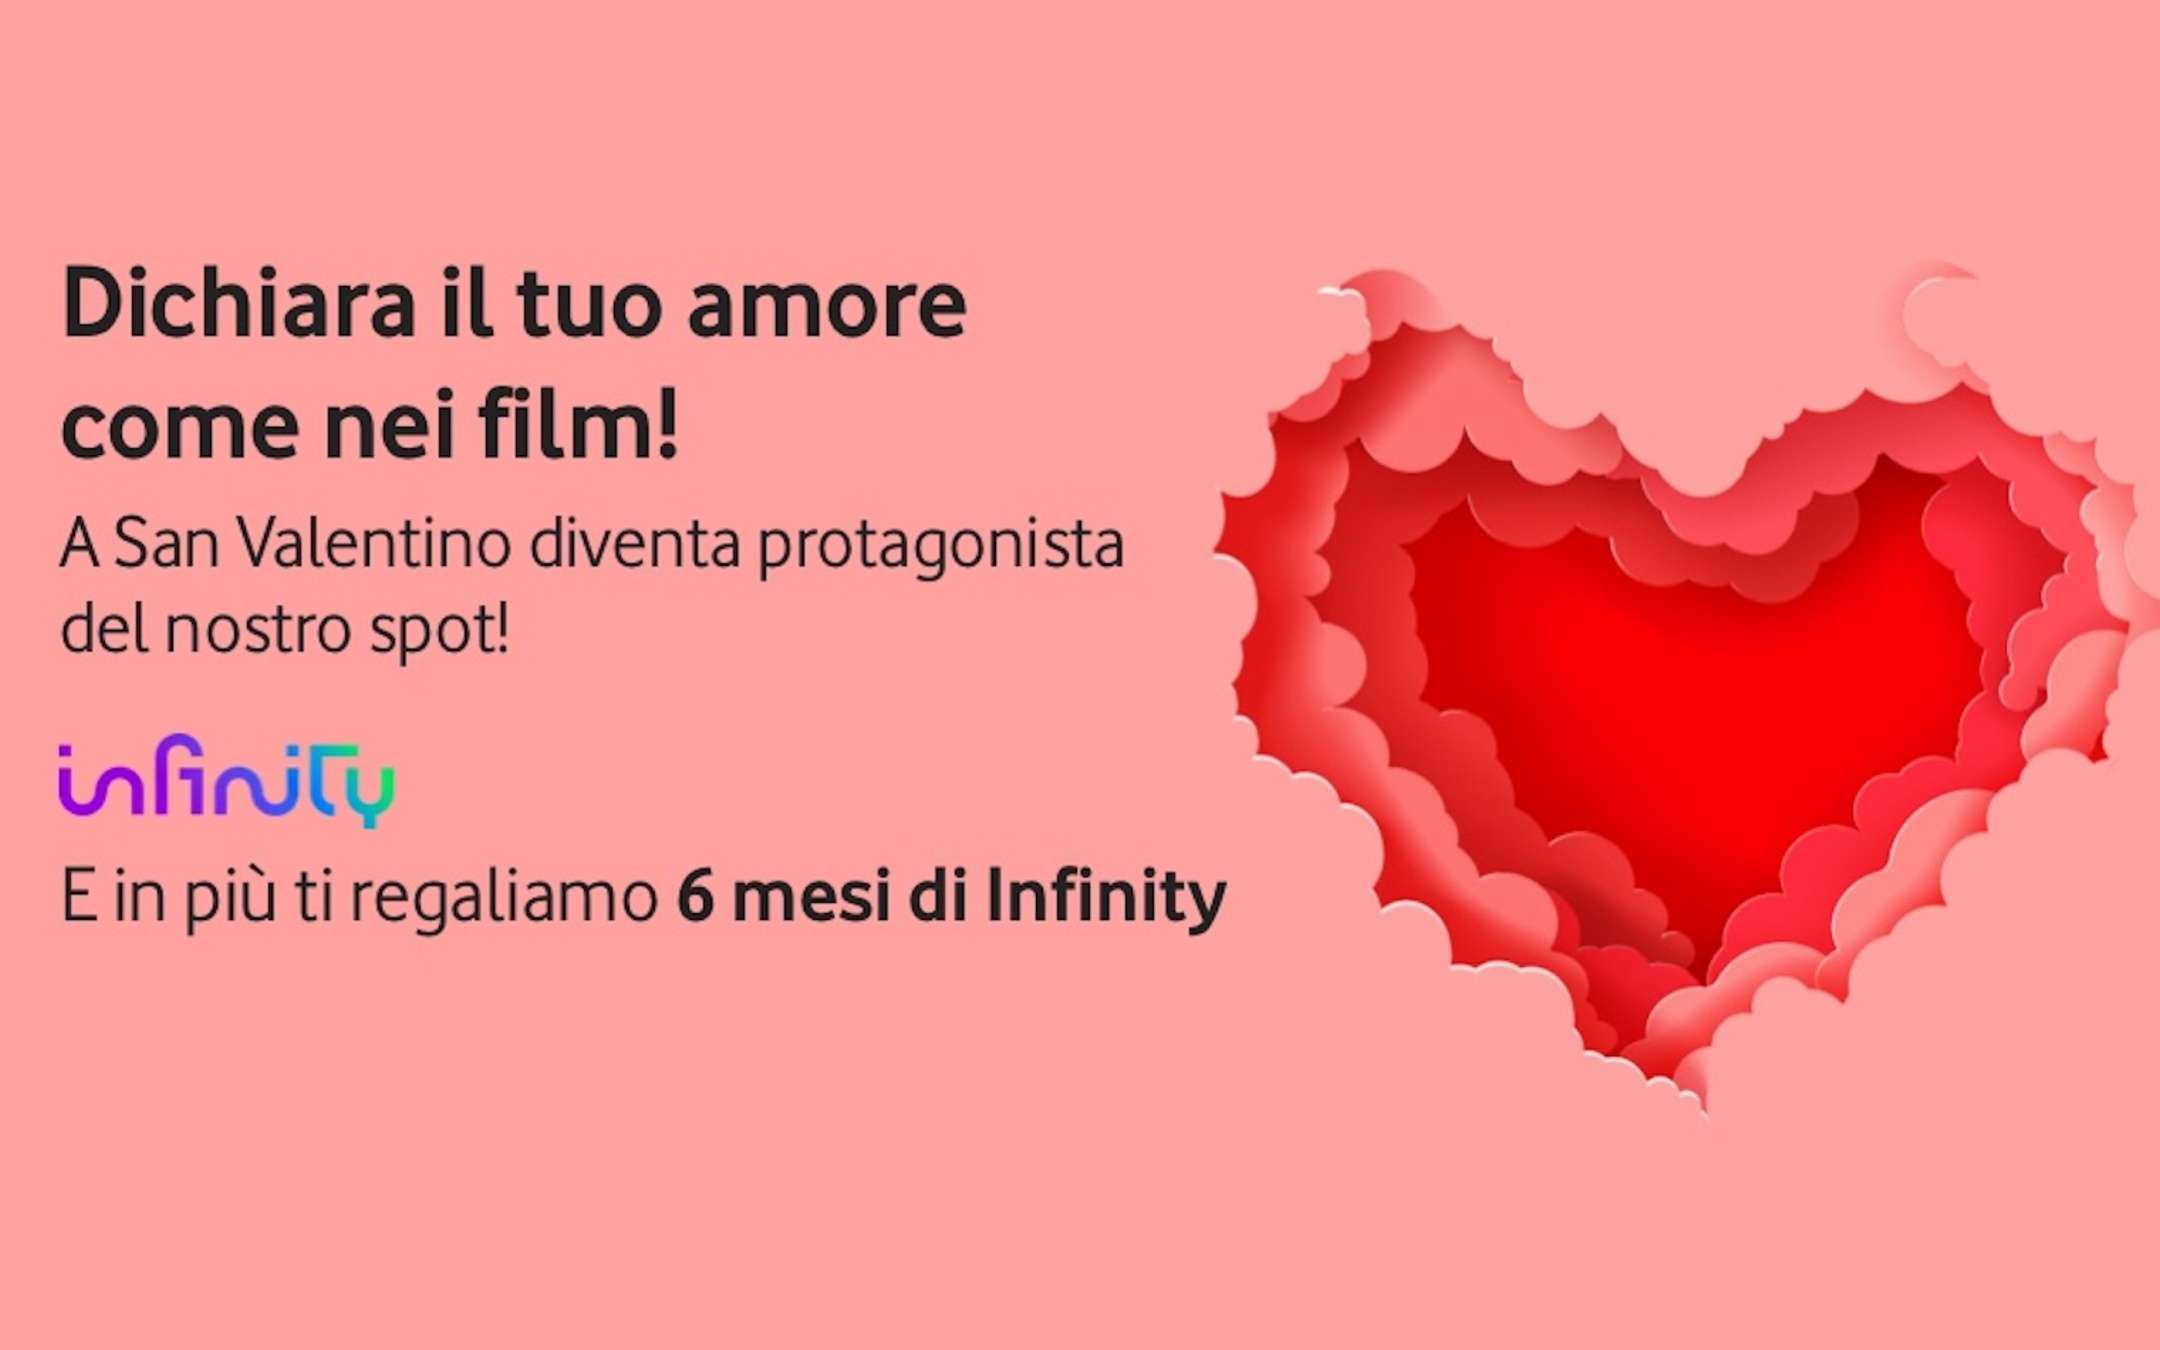 Vodafone a San Valentino 6 mesi di Infinity gratis